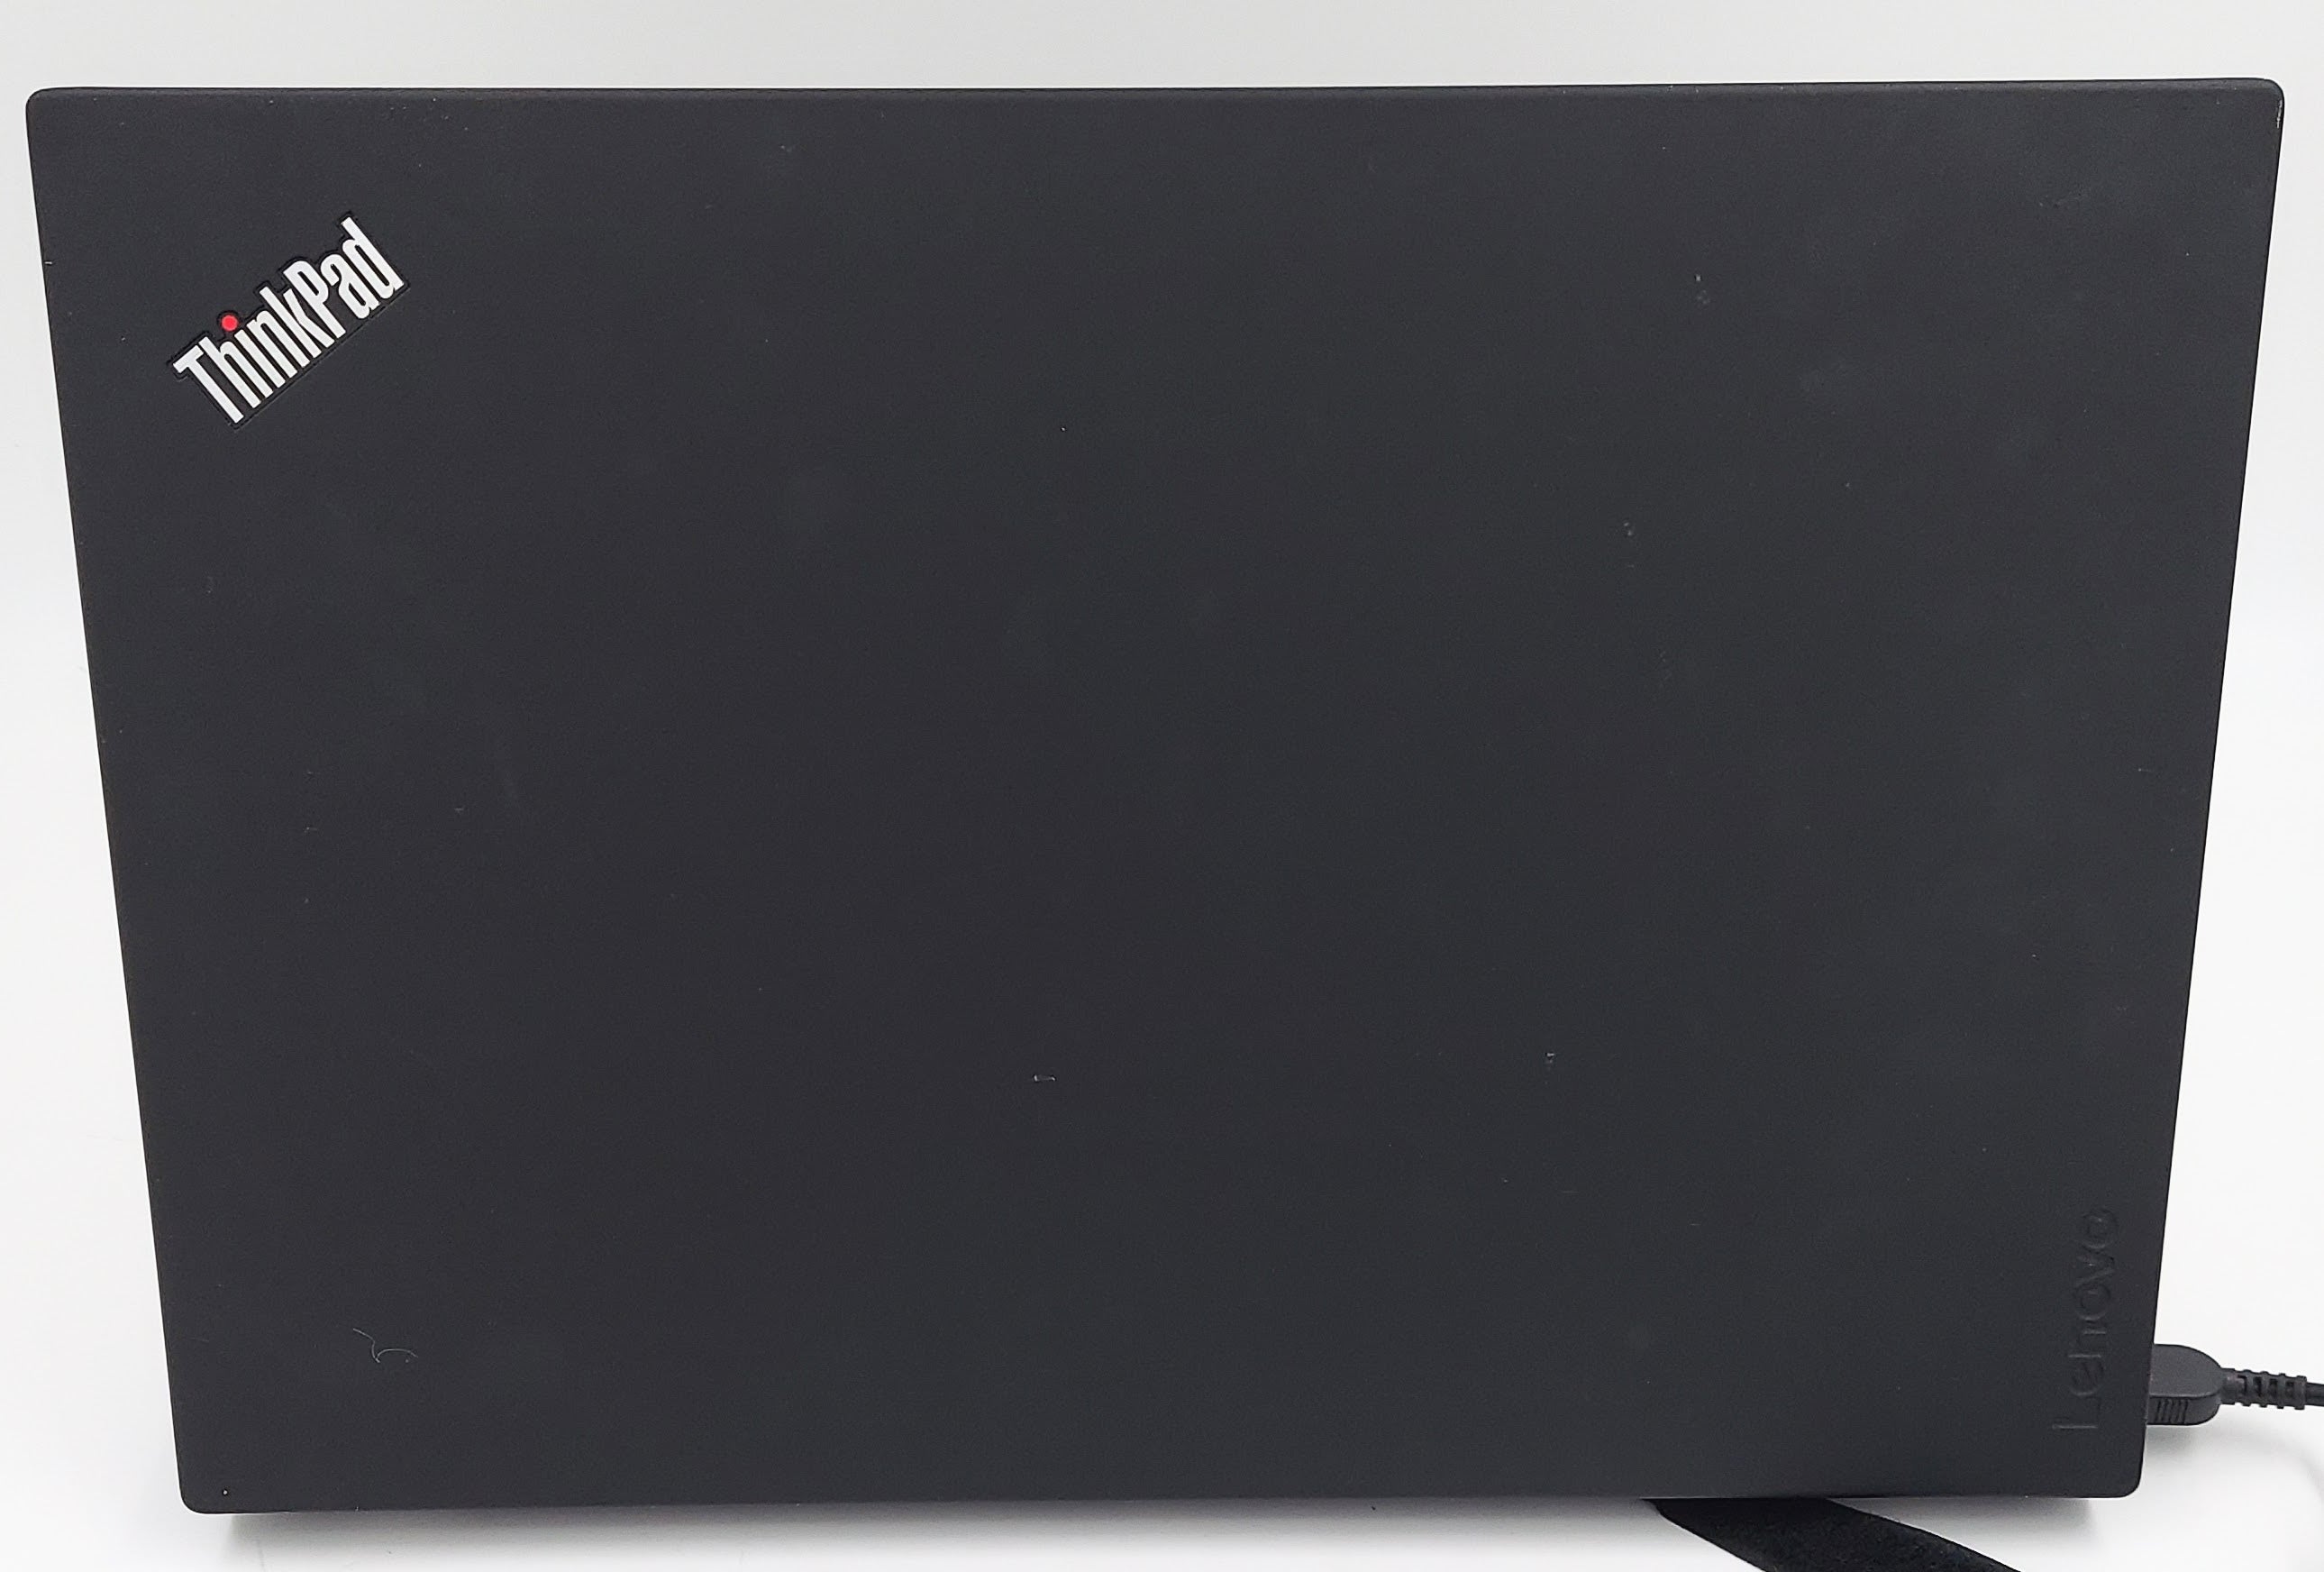 Lenovo Thinkpad T470 i7-6500U U 2.5GHz Laptop - 8GB RAM 256GB SSD - Win 10 Pro